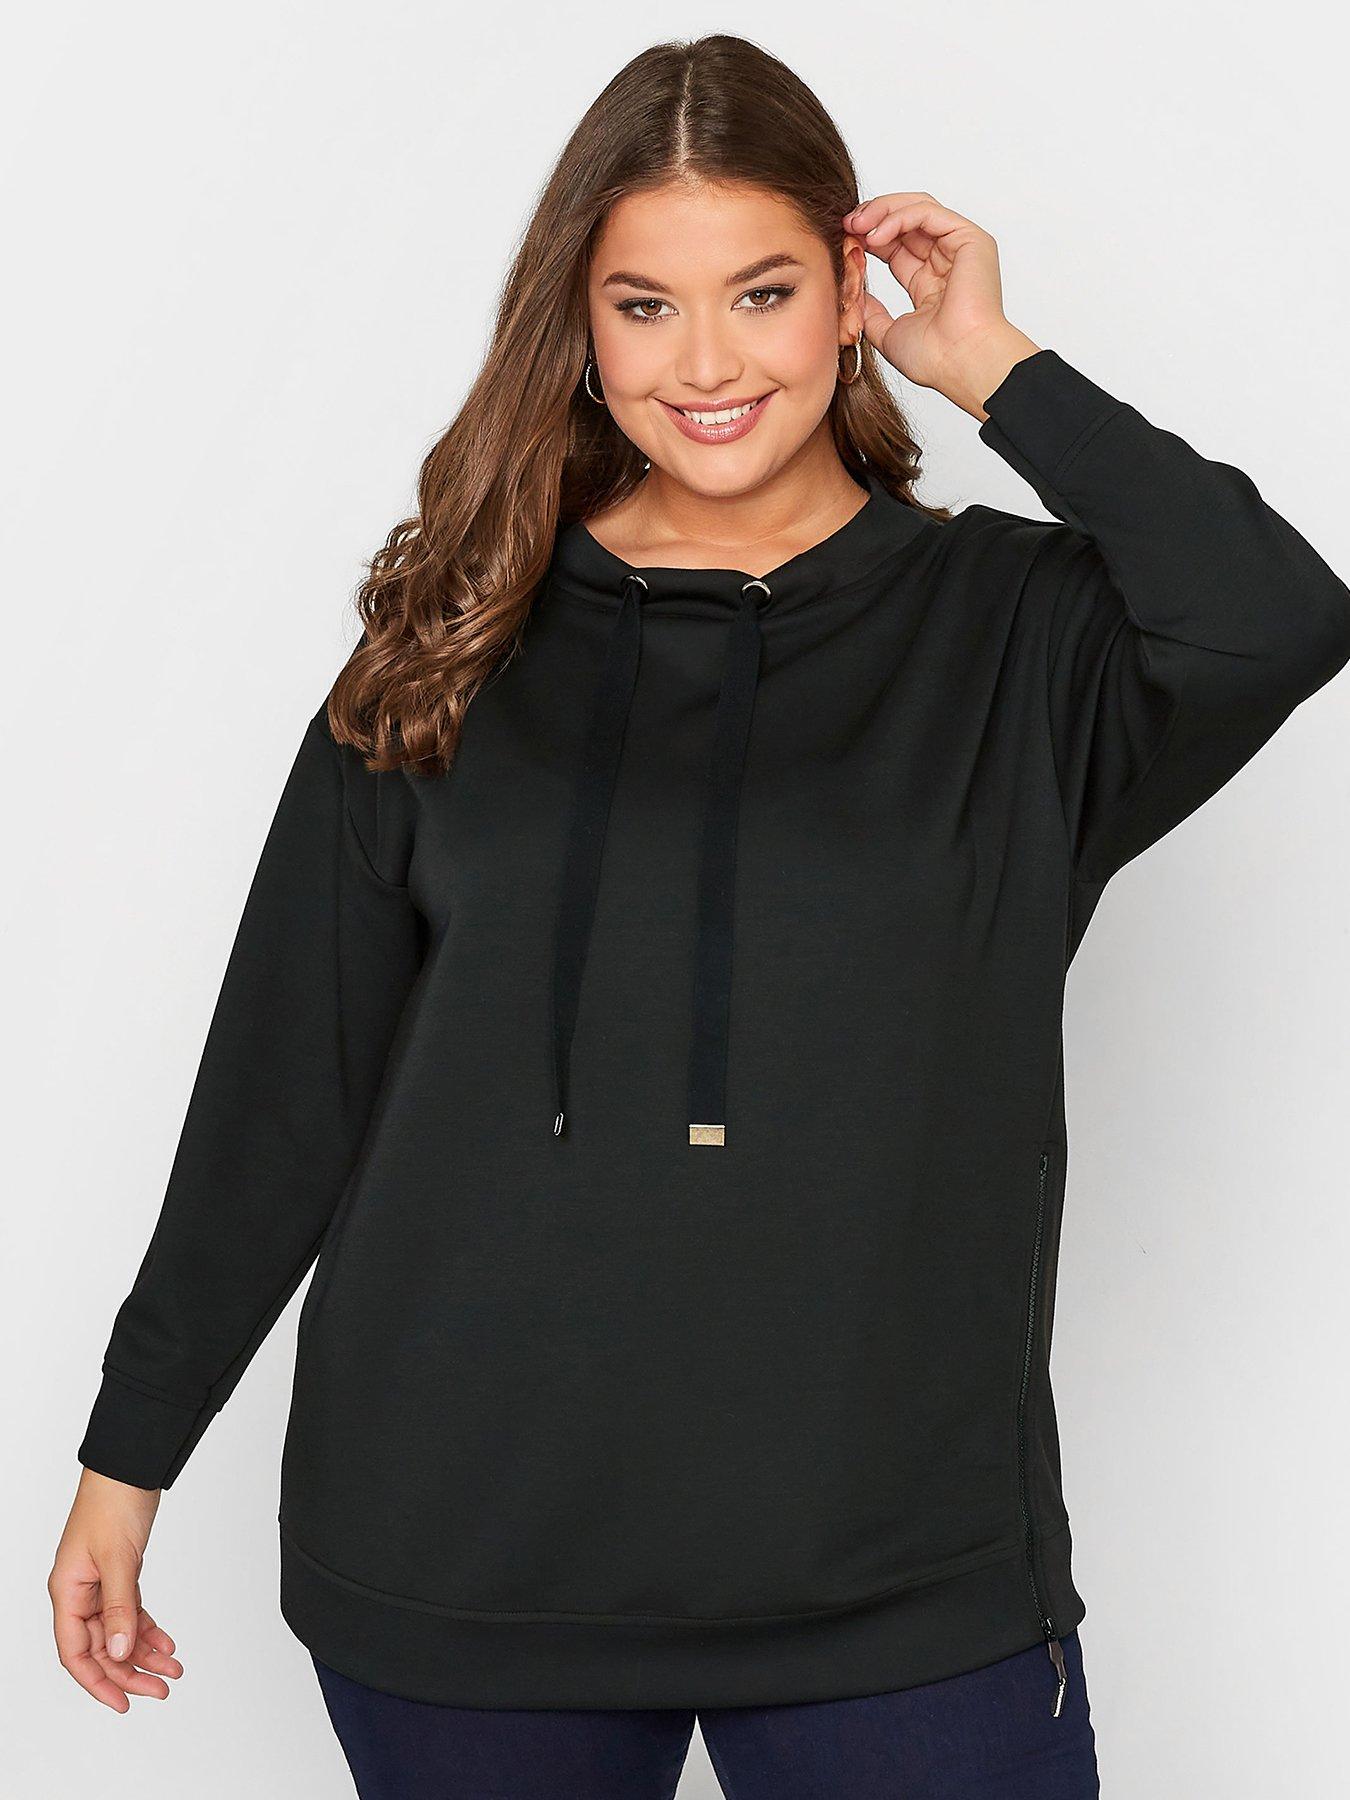 WOMEN FASHION Jumpers & Sweatshirts Sweatshirt Hoodless discount 57% Black L NoName sweatshirt 